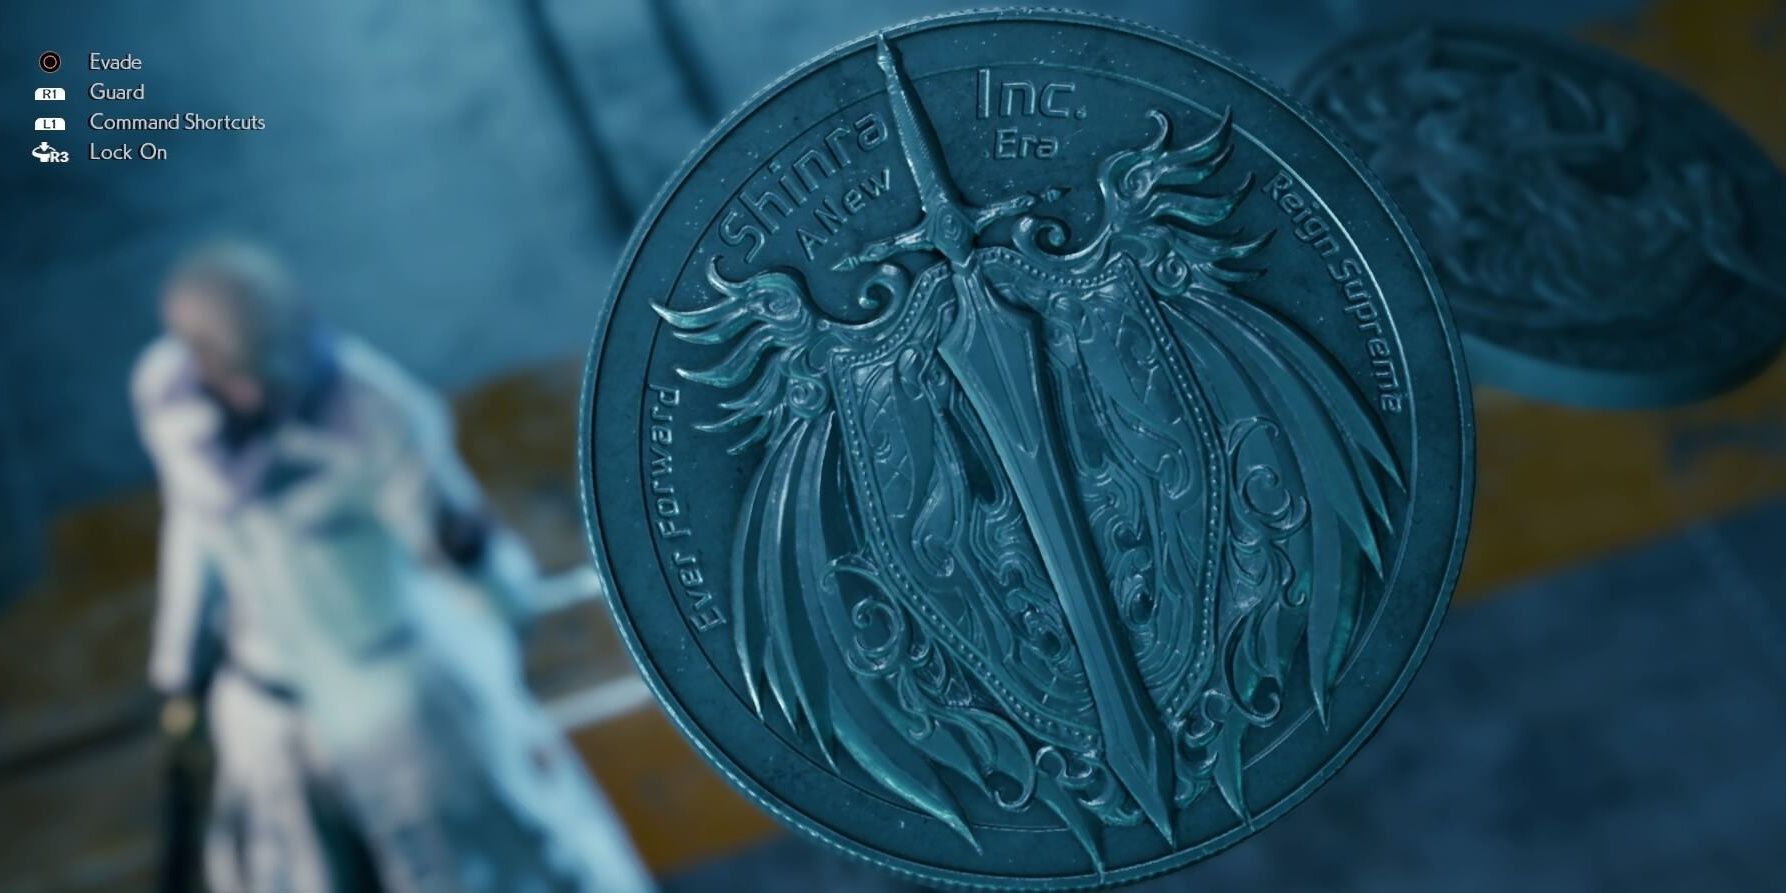 Rufus' coin in Final Fantasy VII Remake